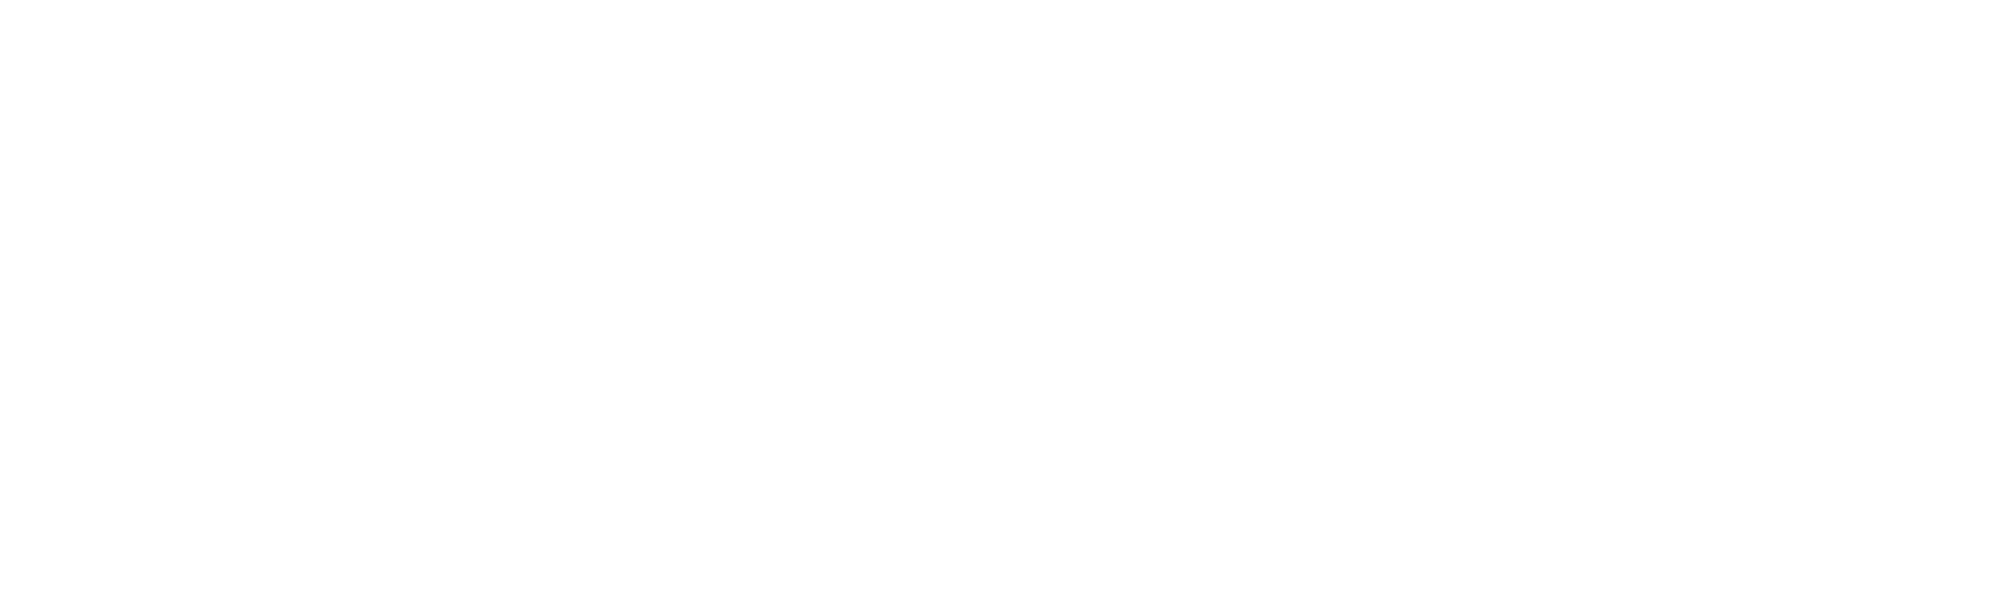 HT Micron Semicondutores